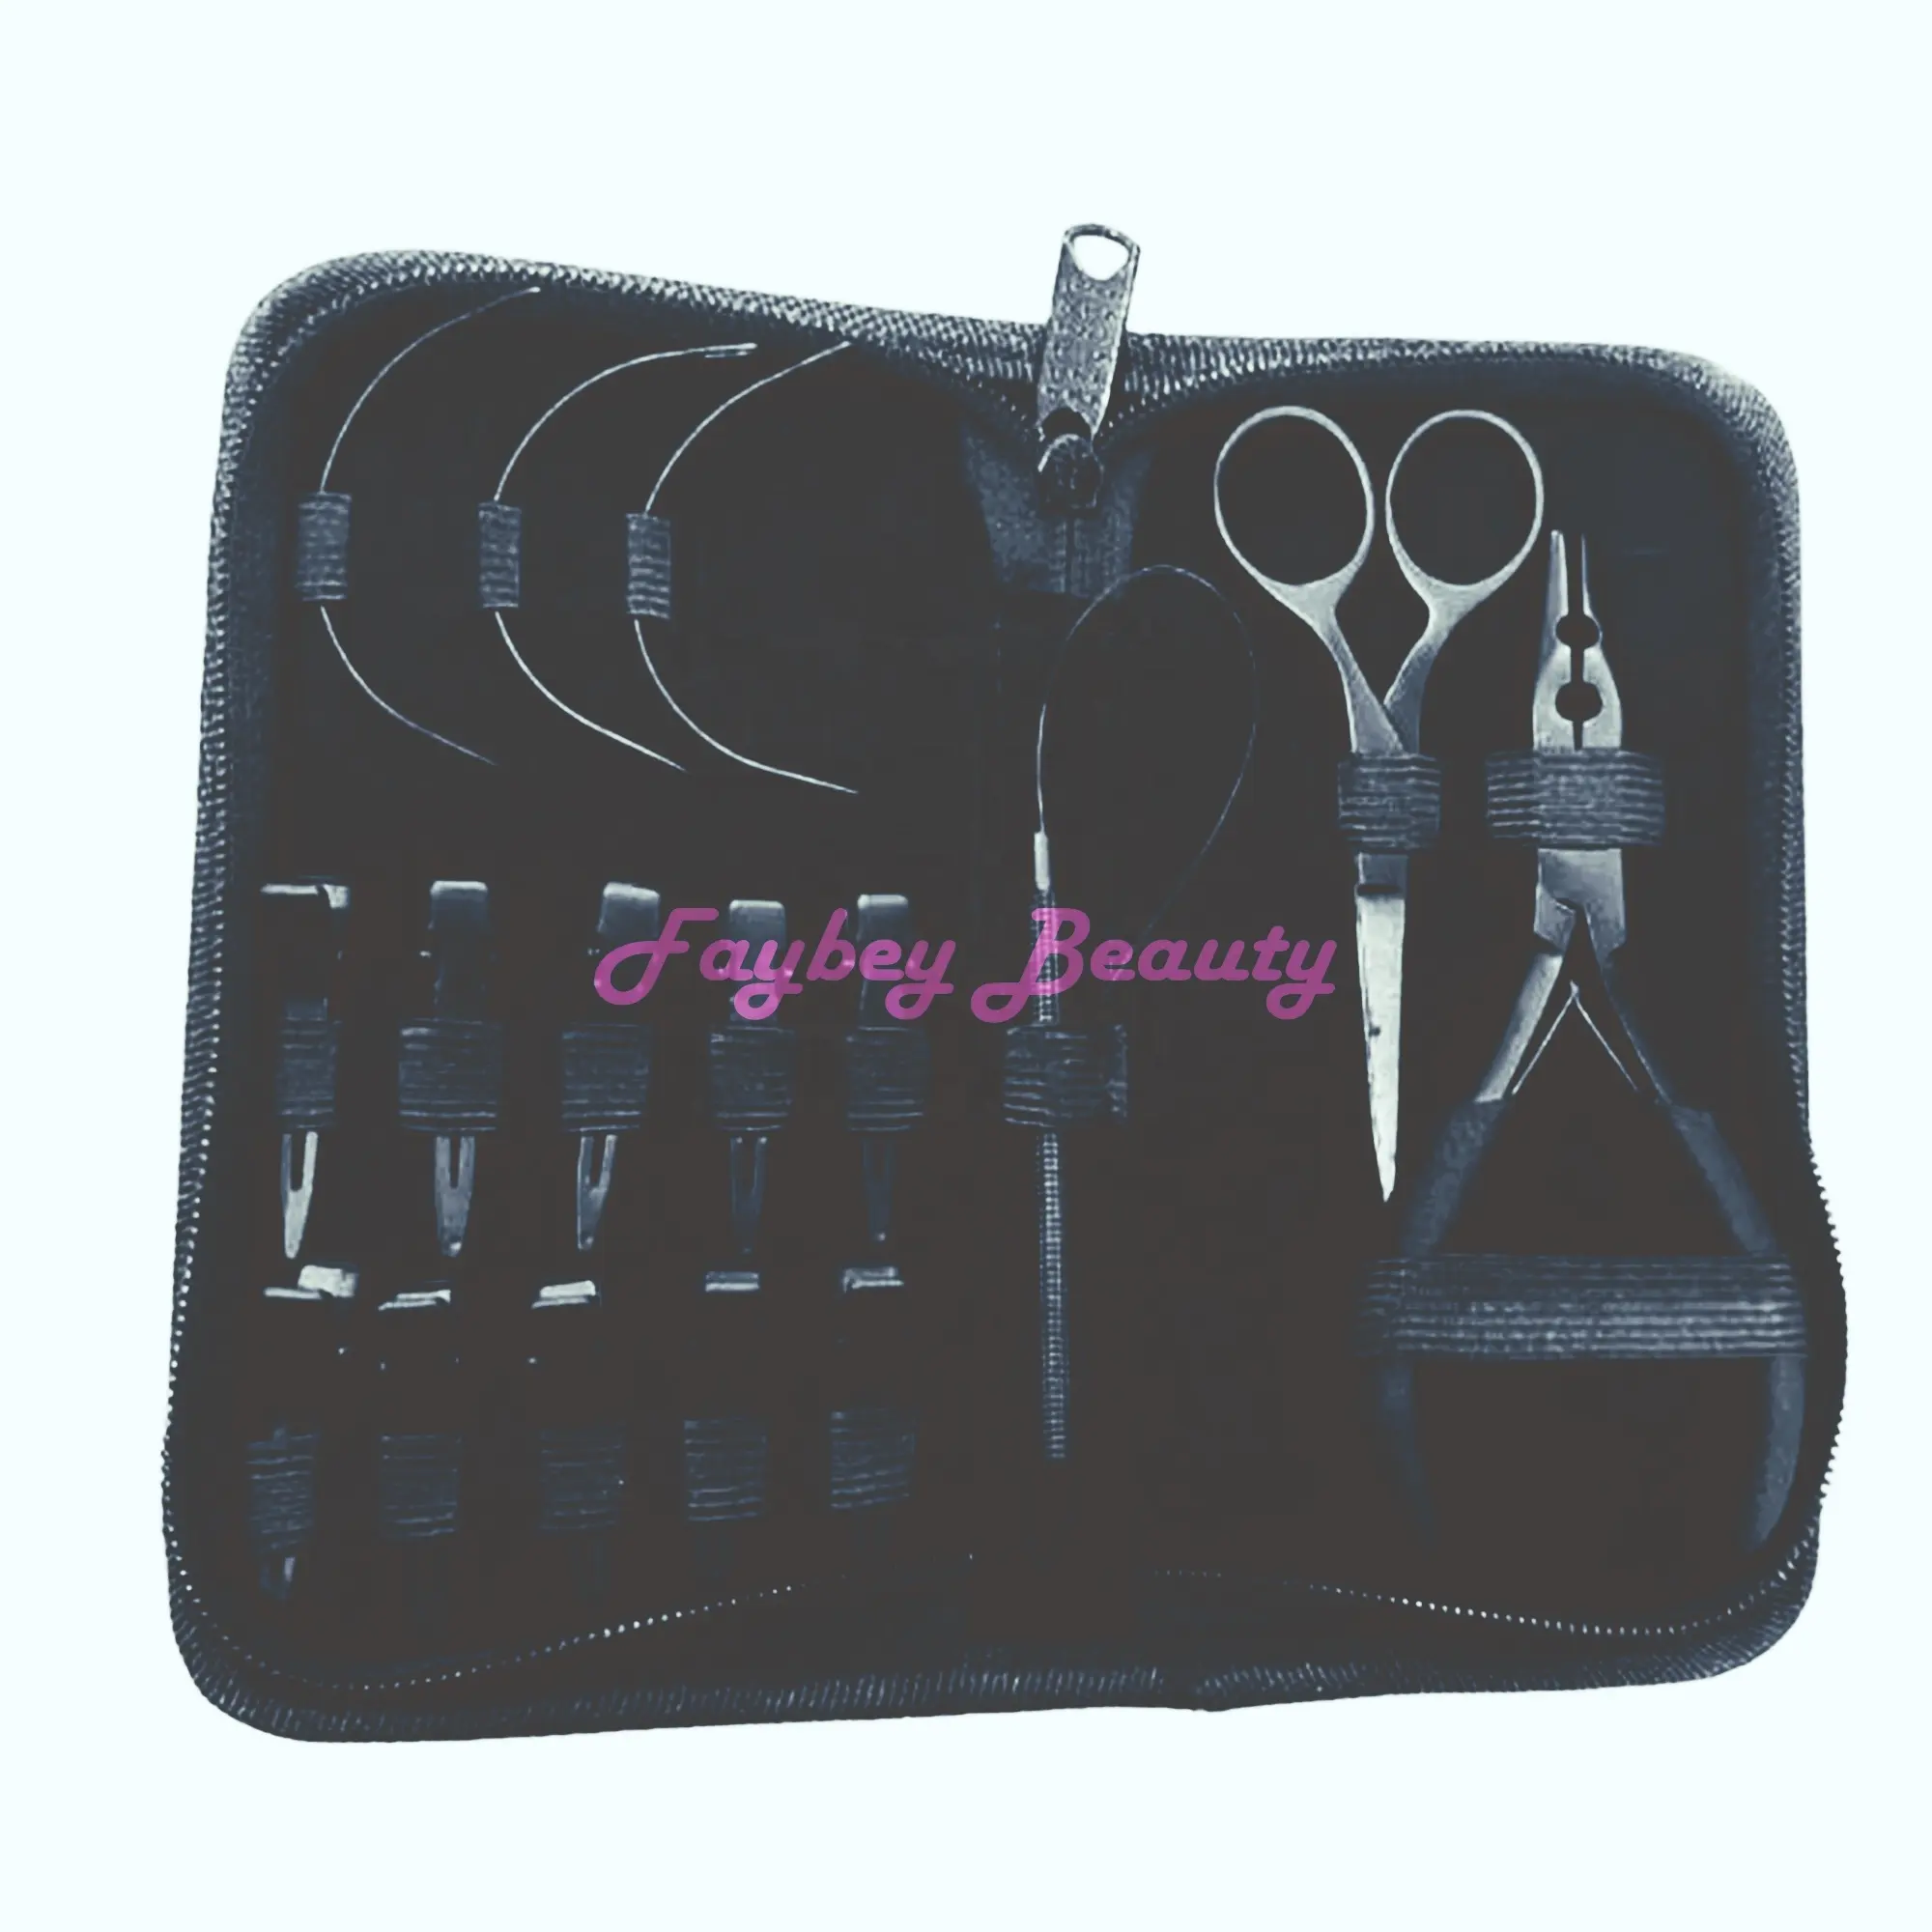 Kit de herramientas de extensión de cabello, kit profesional especial de alta calidad para uso en salón